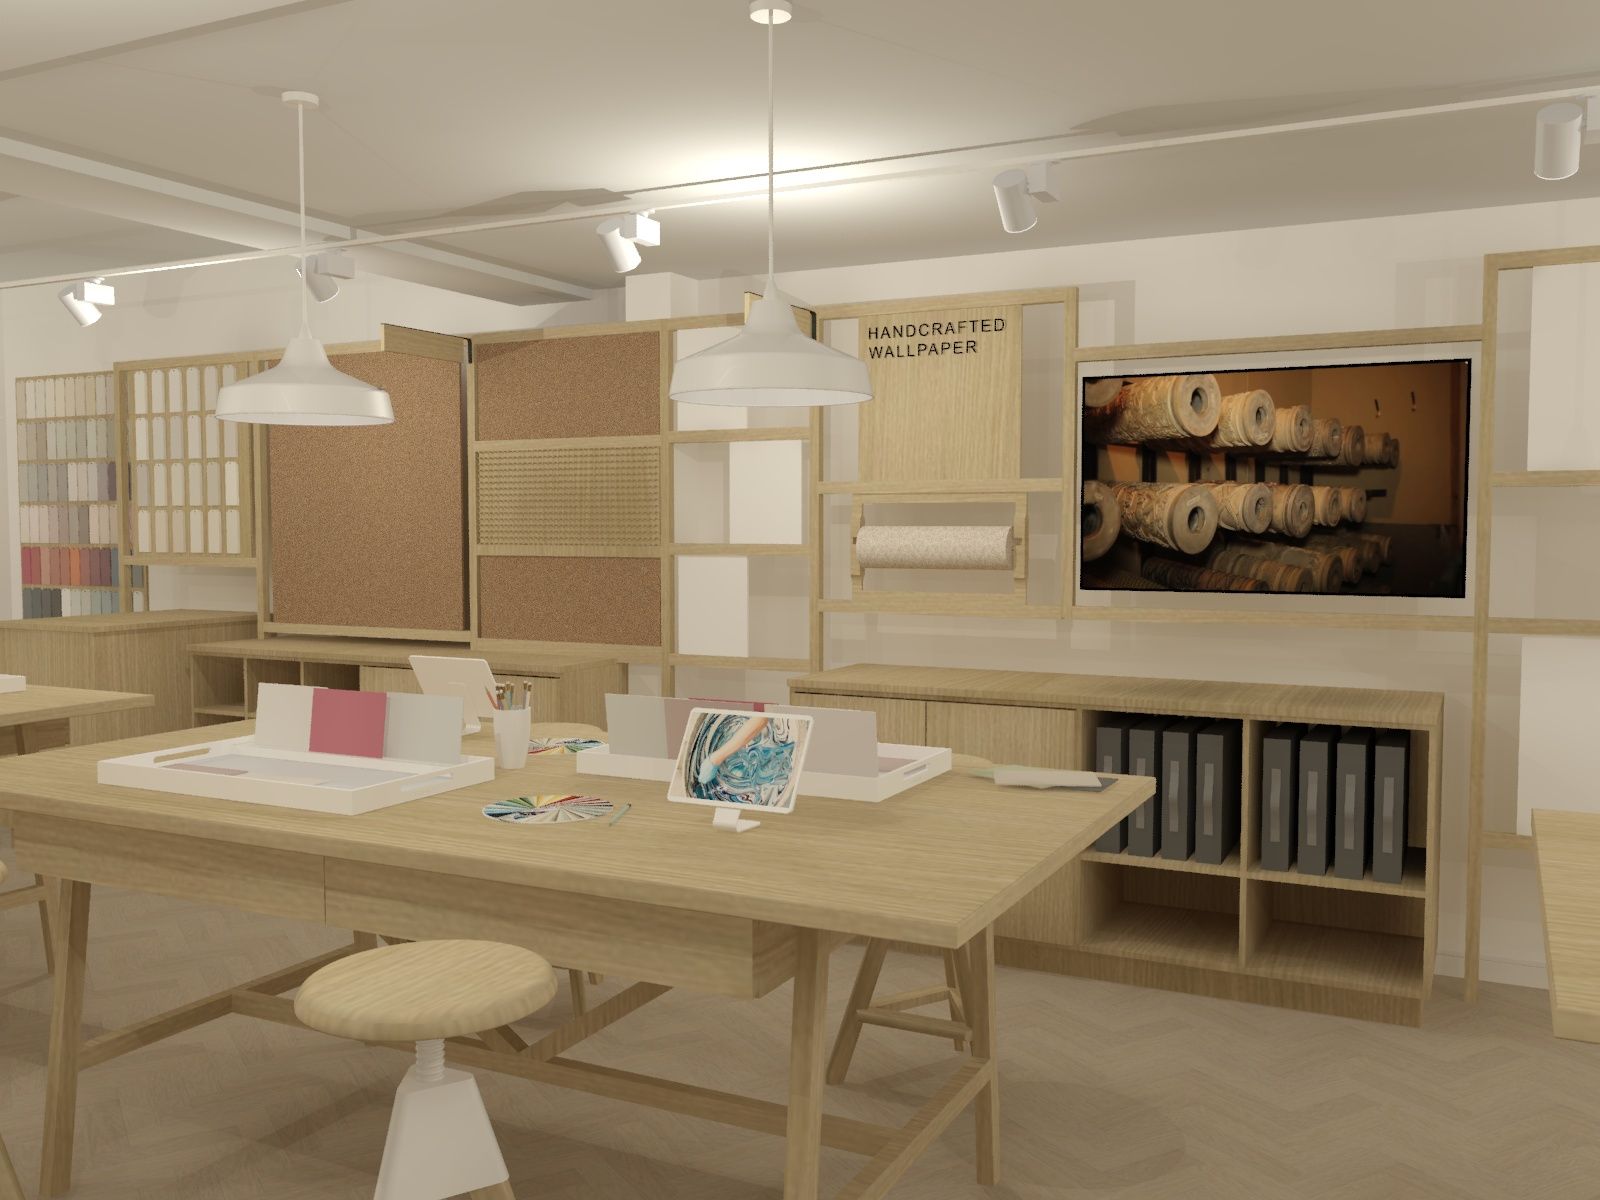 3D visual renders for farrow and ball paint studio interior design and shopfitting london